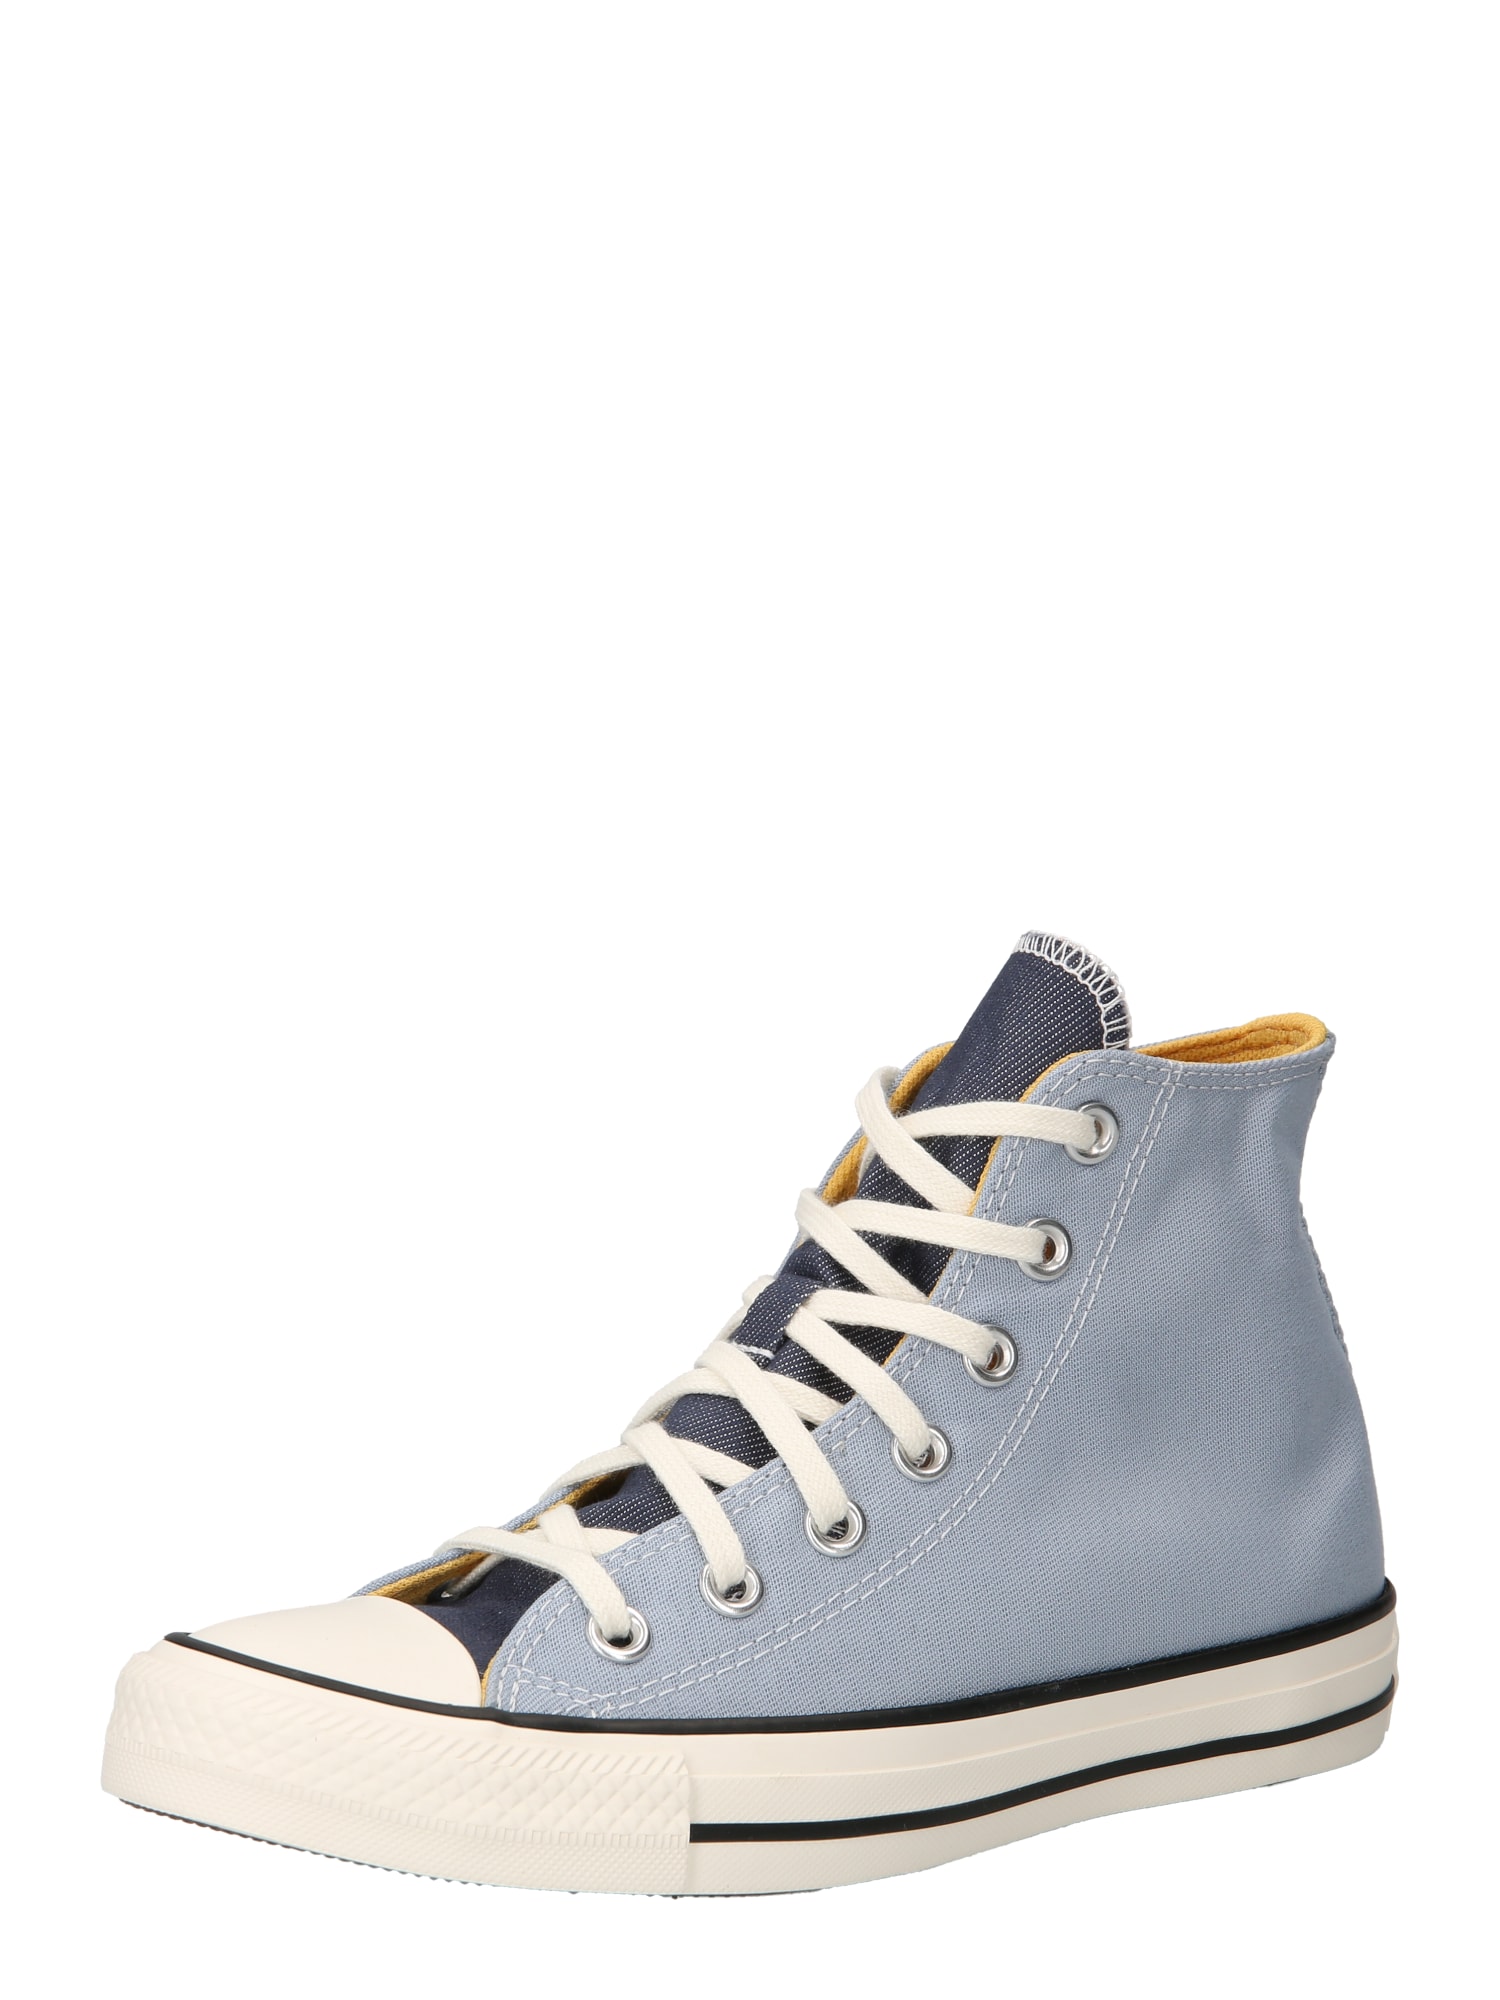 Converse CONVERSE Sneaker 'Chuck Taylor All Star' navy / taubenblau / gelb / rosa